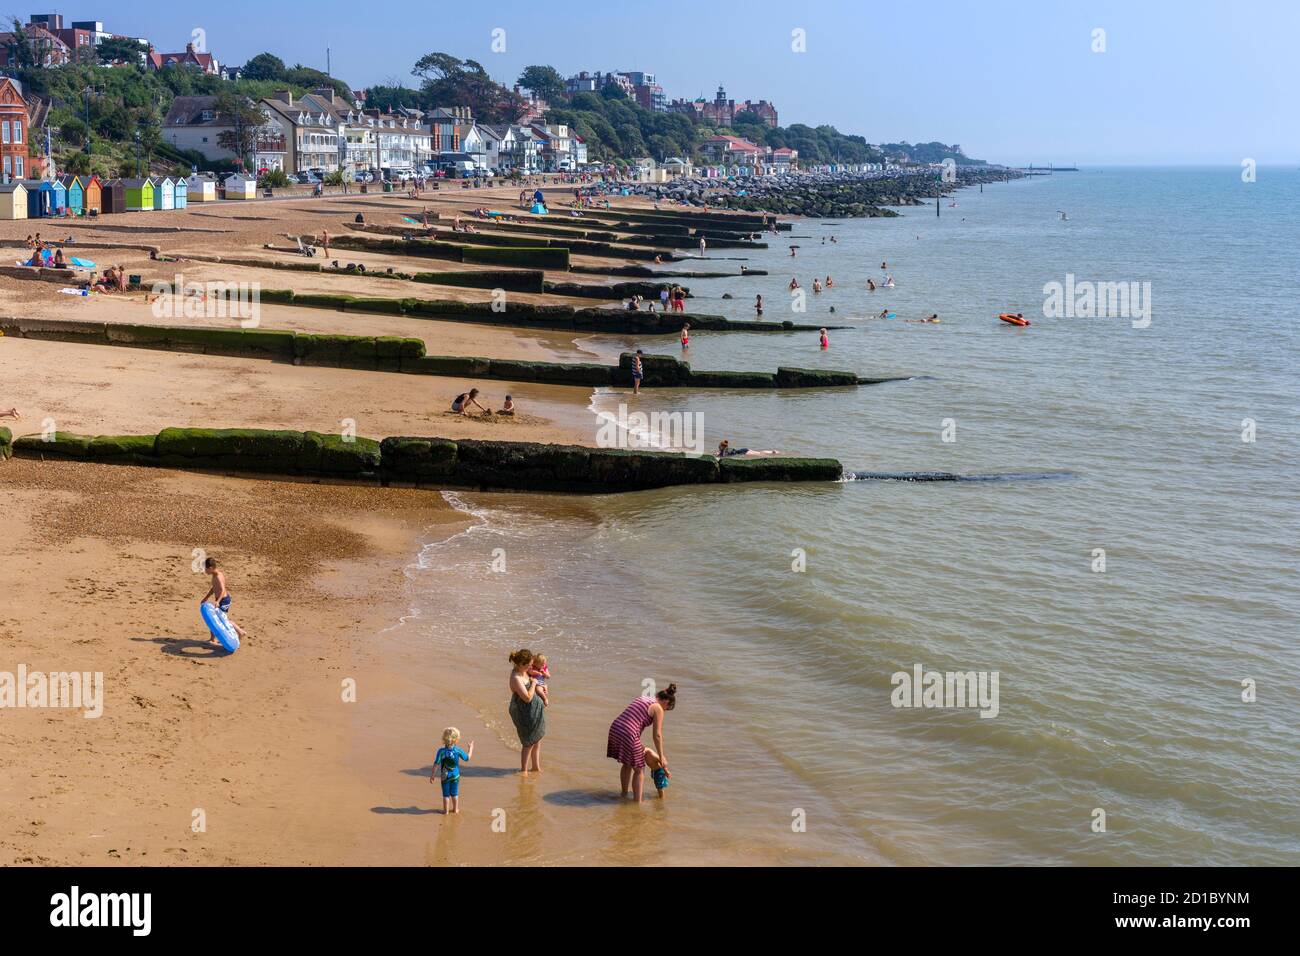 The beach at Felixstowe, Suffolk, England, UK. Stock Photo